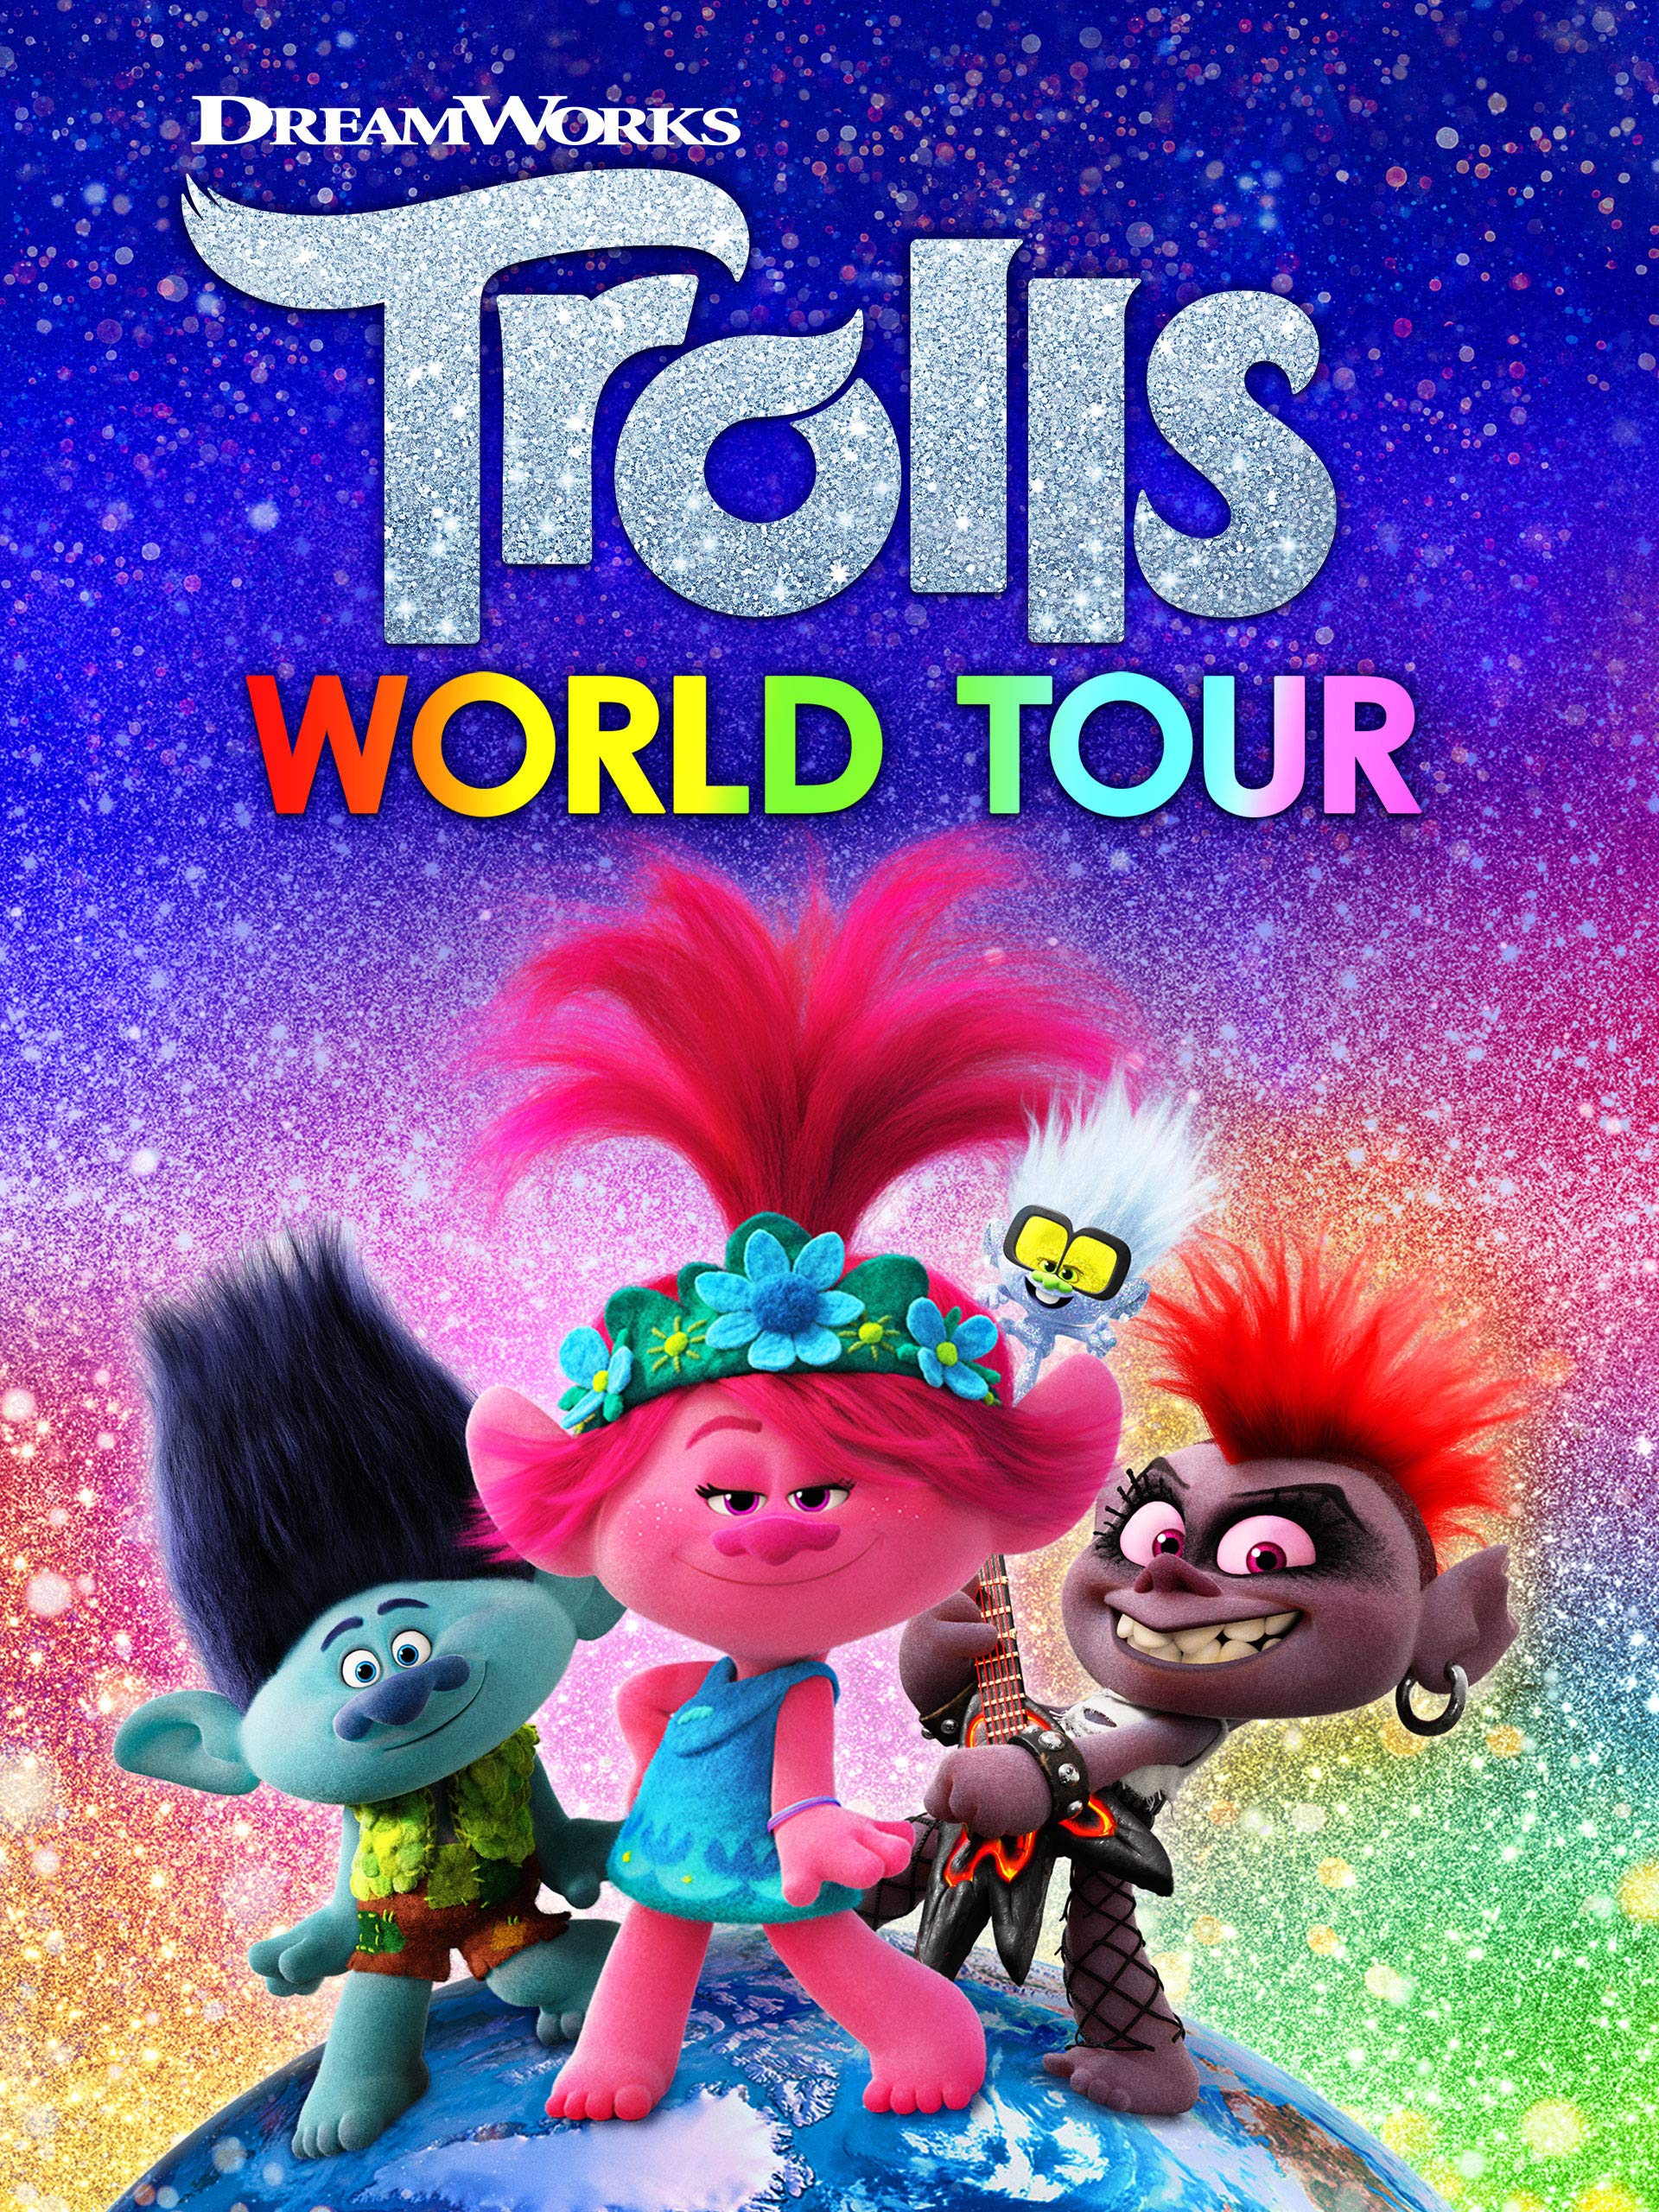 Trolls World Tour DVD cover.